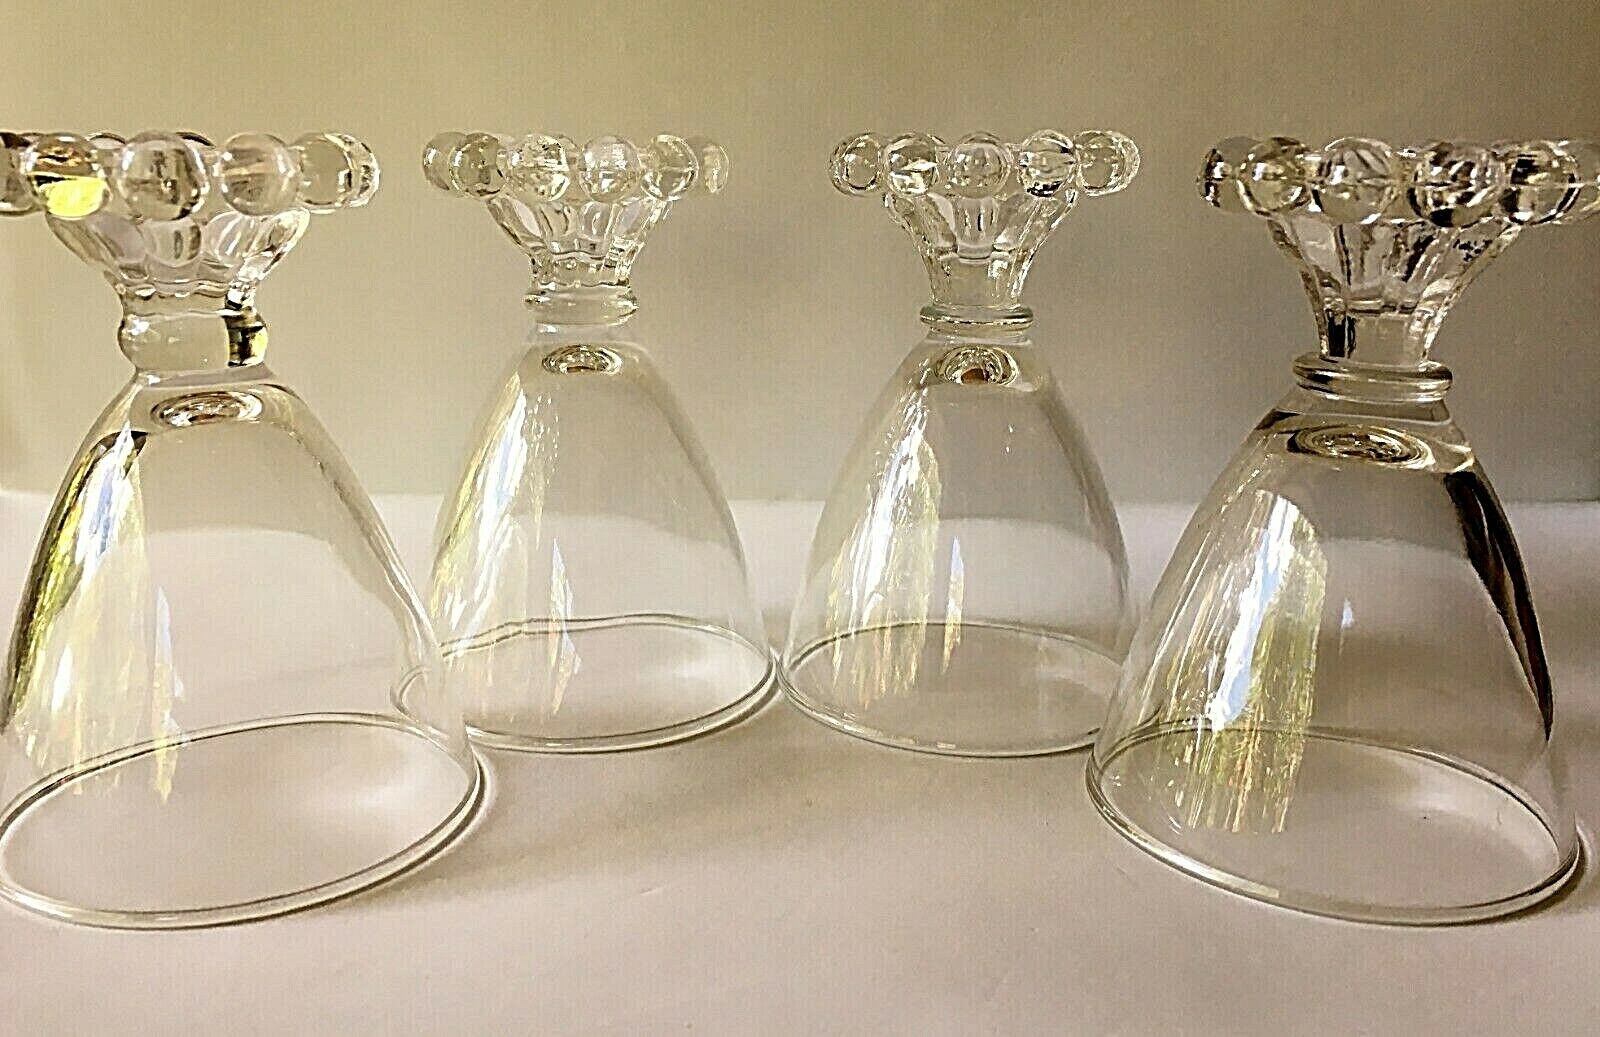 Depression Glass Boopie Pattern set of 4 Juice Glasses Vintage Clear Glassware